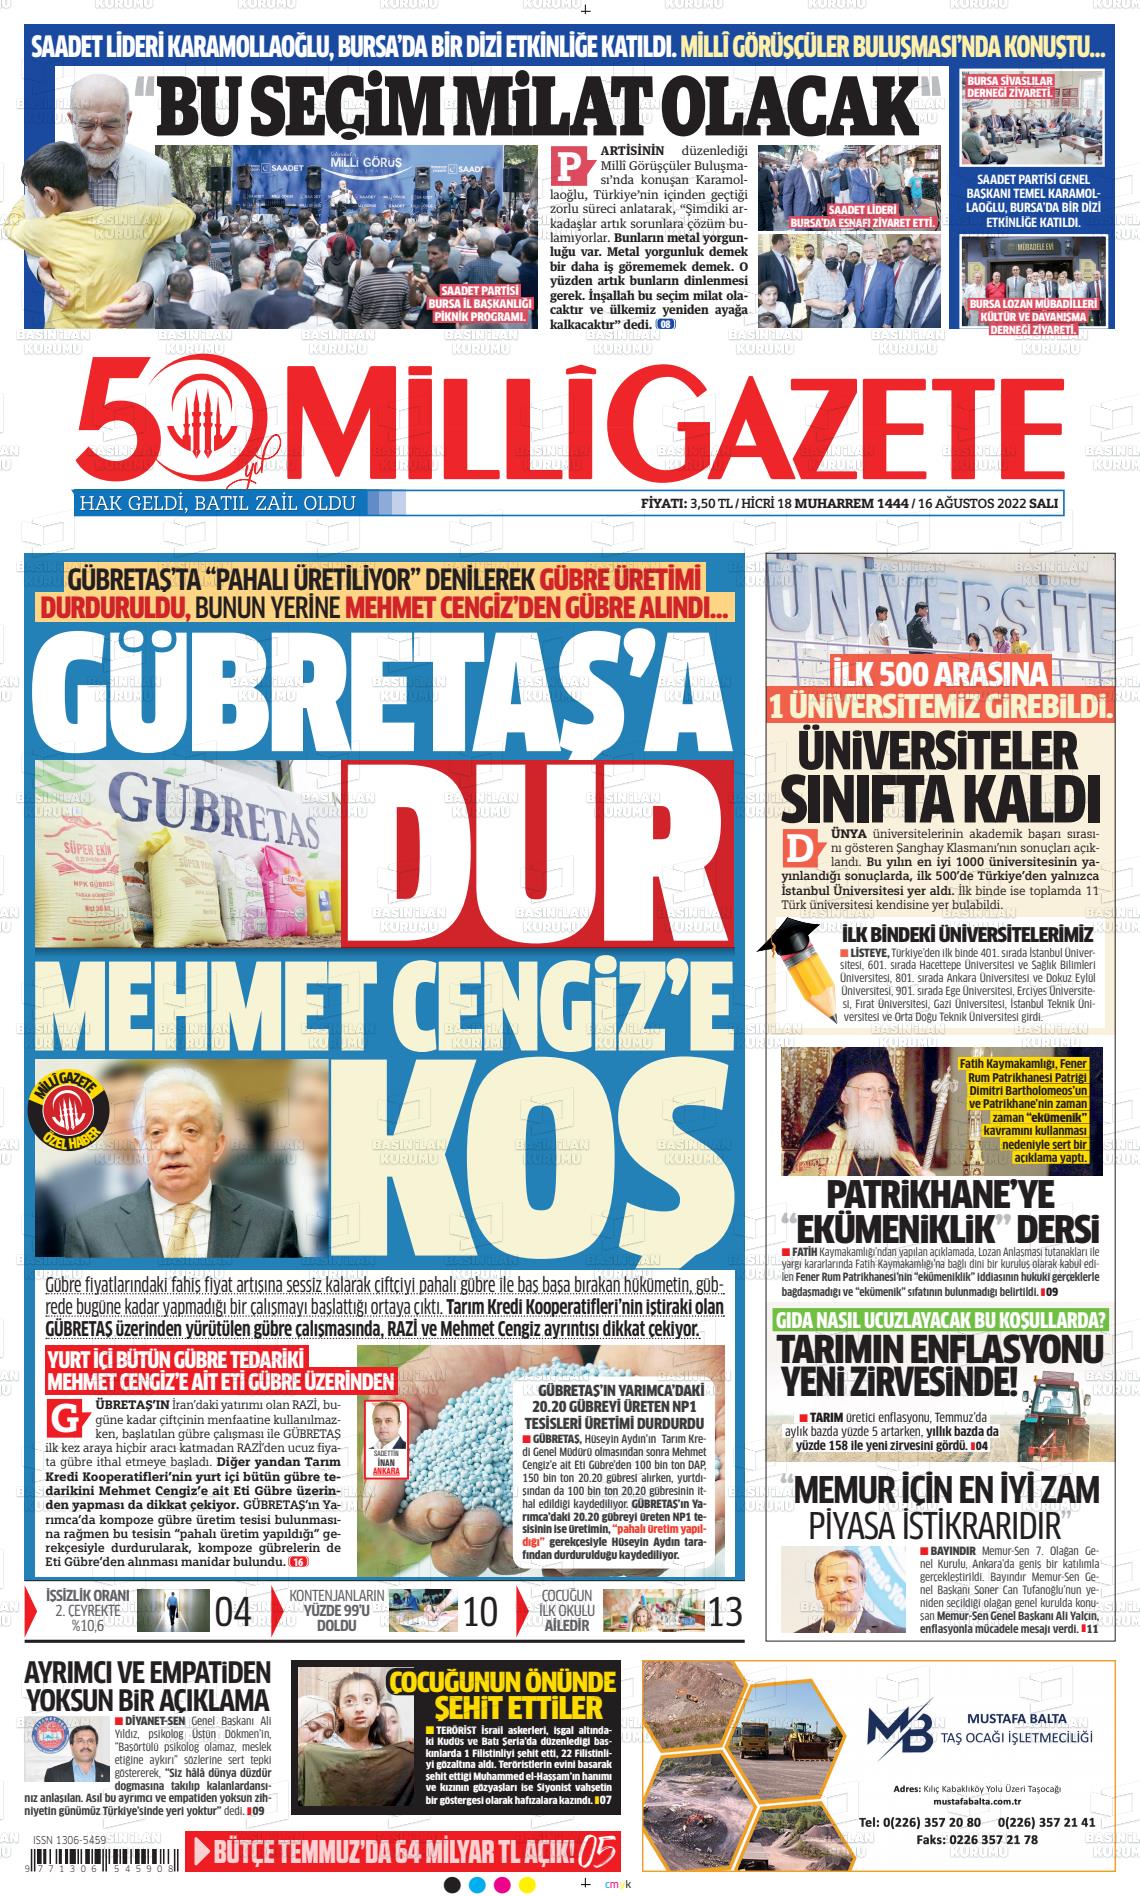 16 Ağustos 2022 Milli Gazete Gazete Manşeti